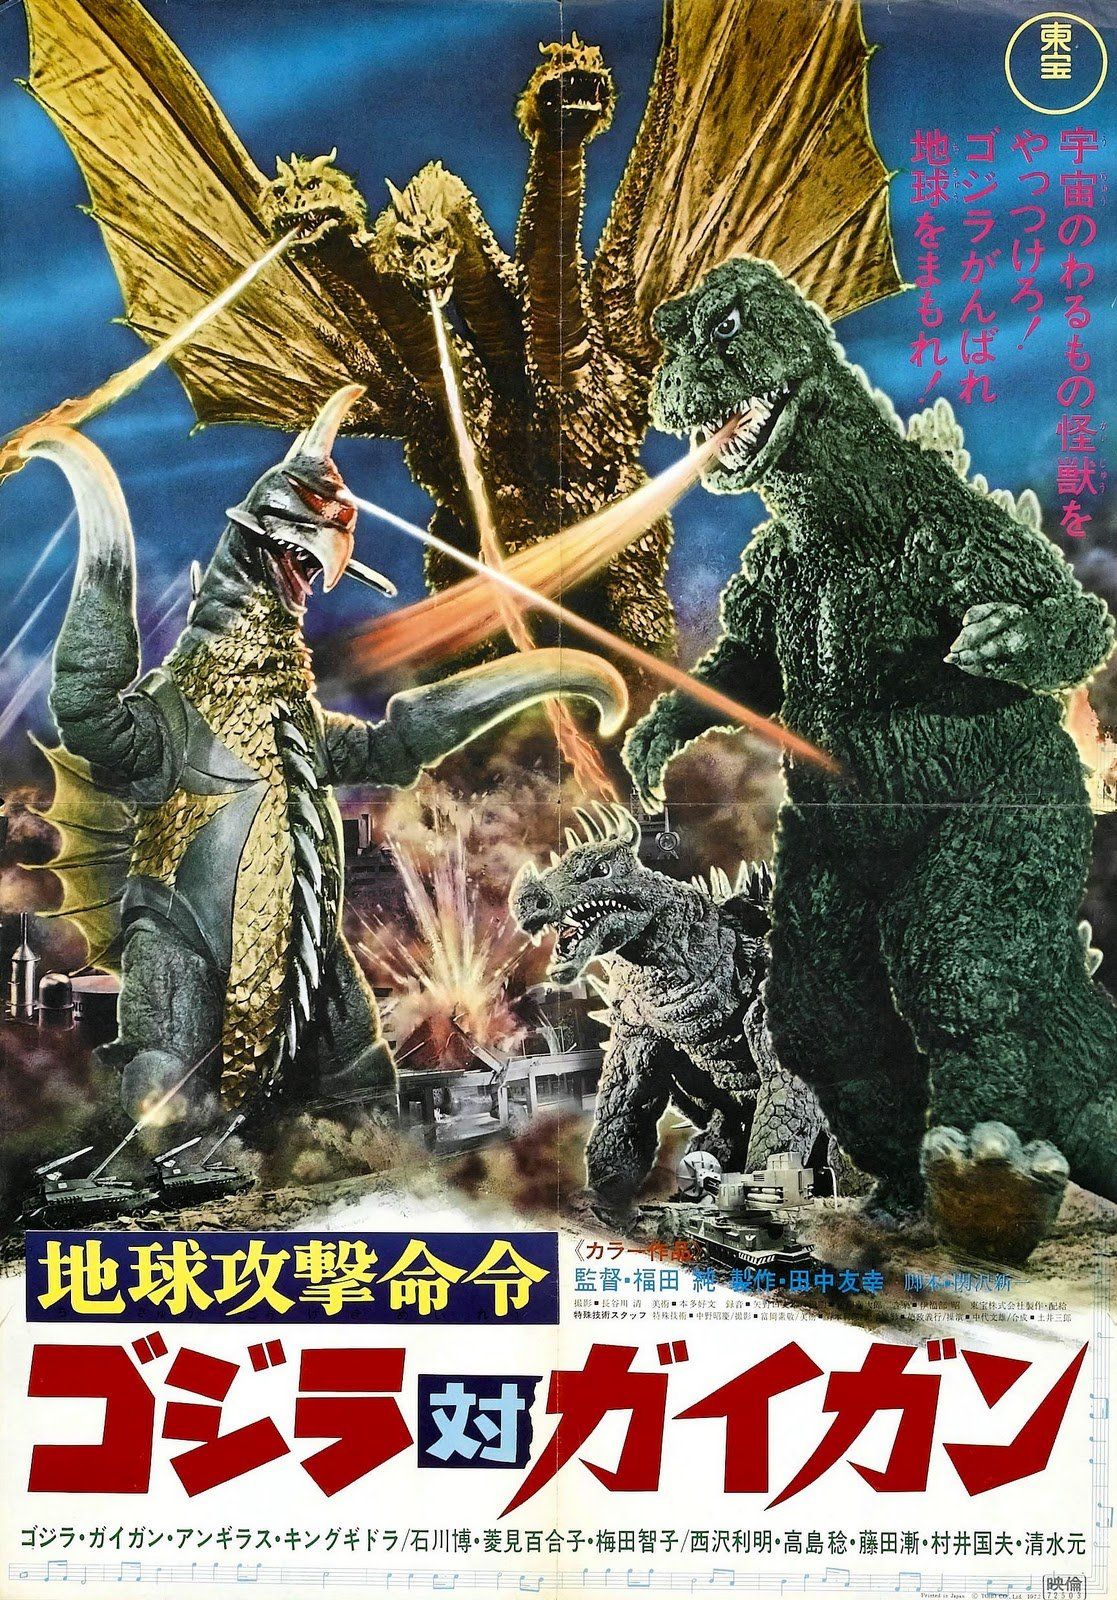 Godzilla domination aliens